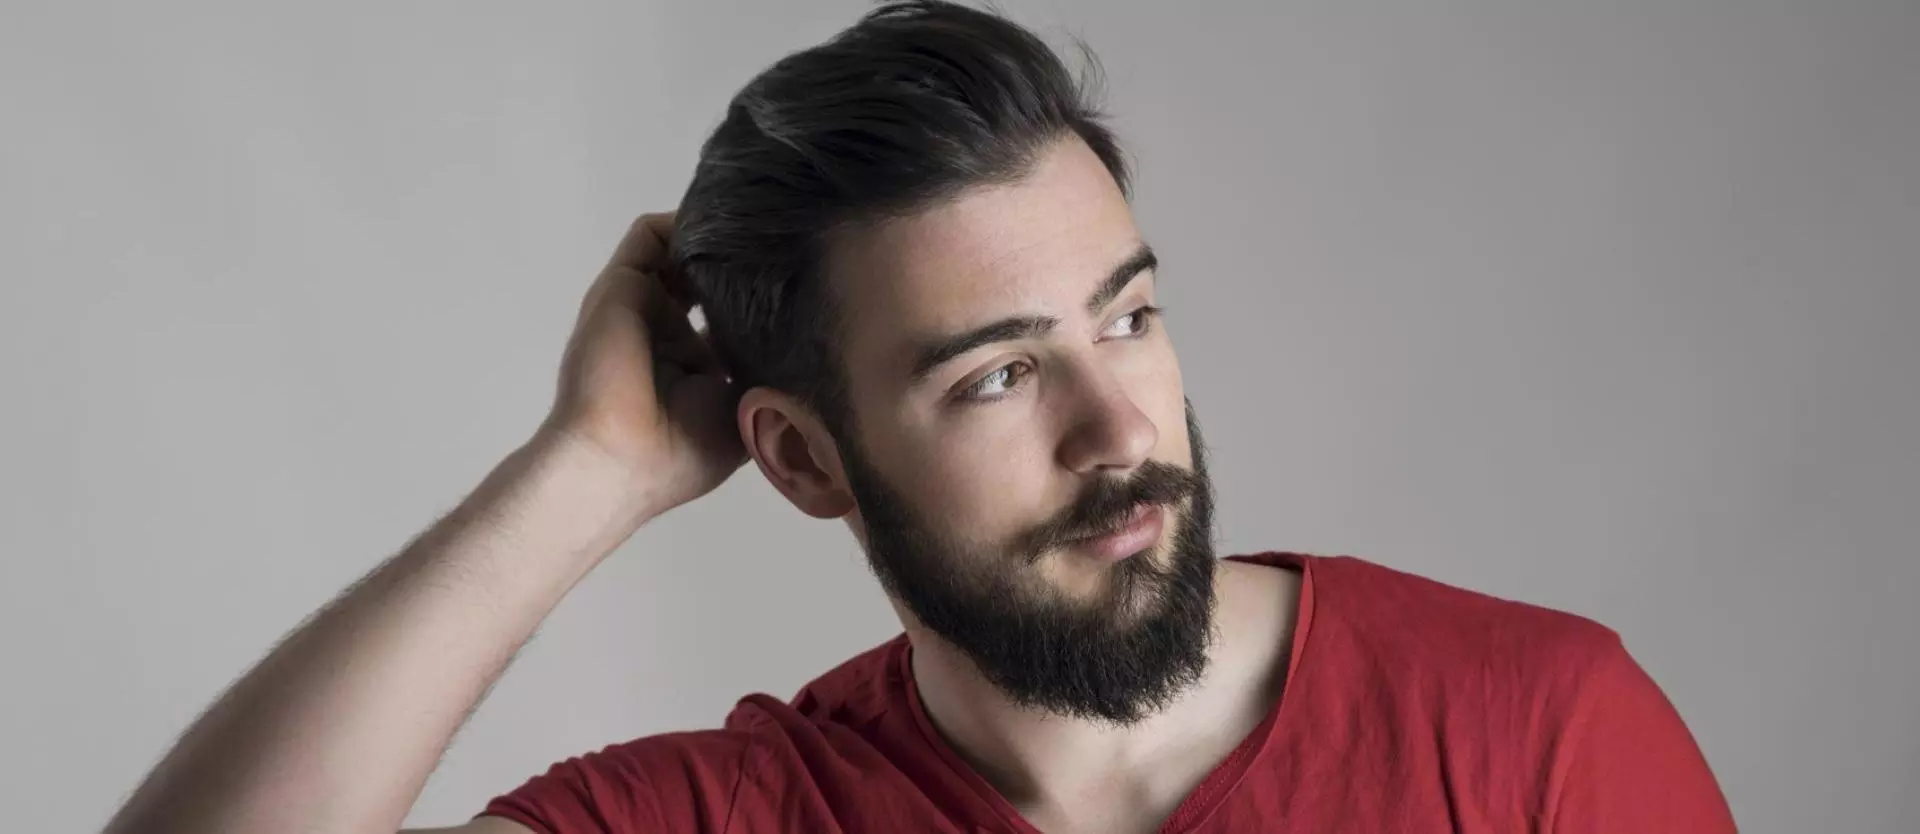 Top 5 Hair Loss Options for Men’s Hair Loss